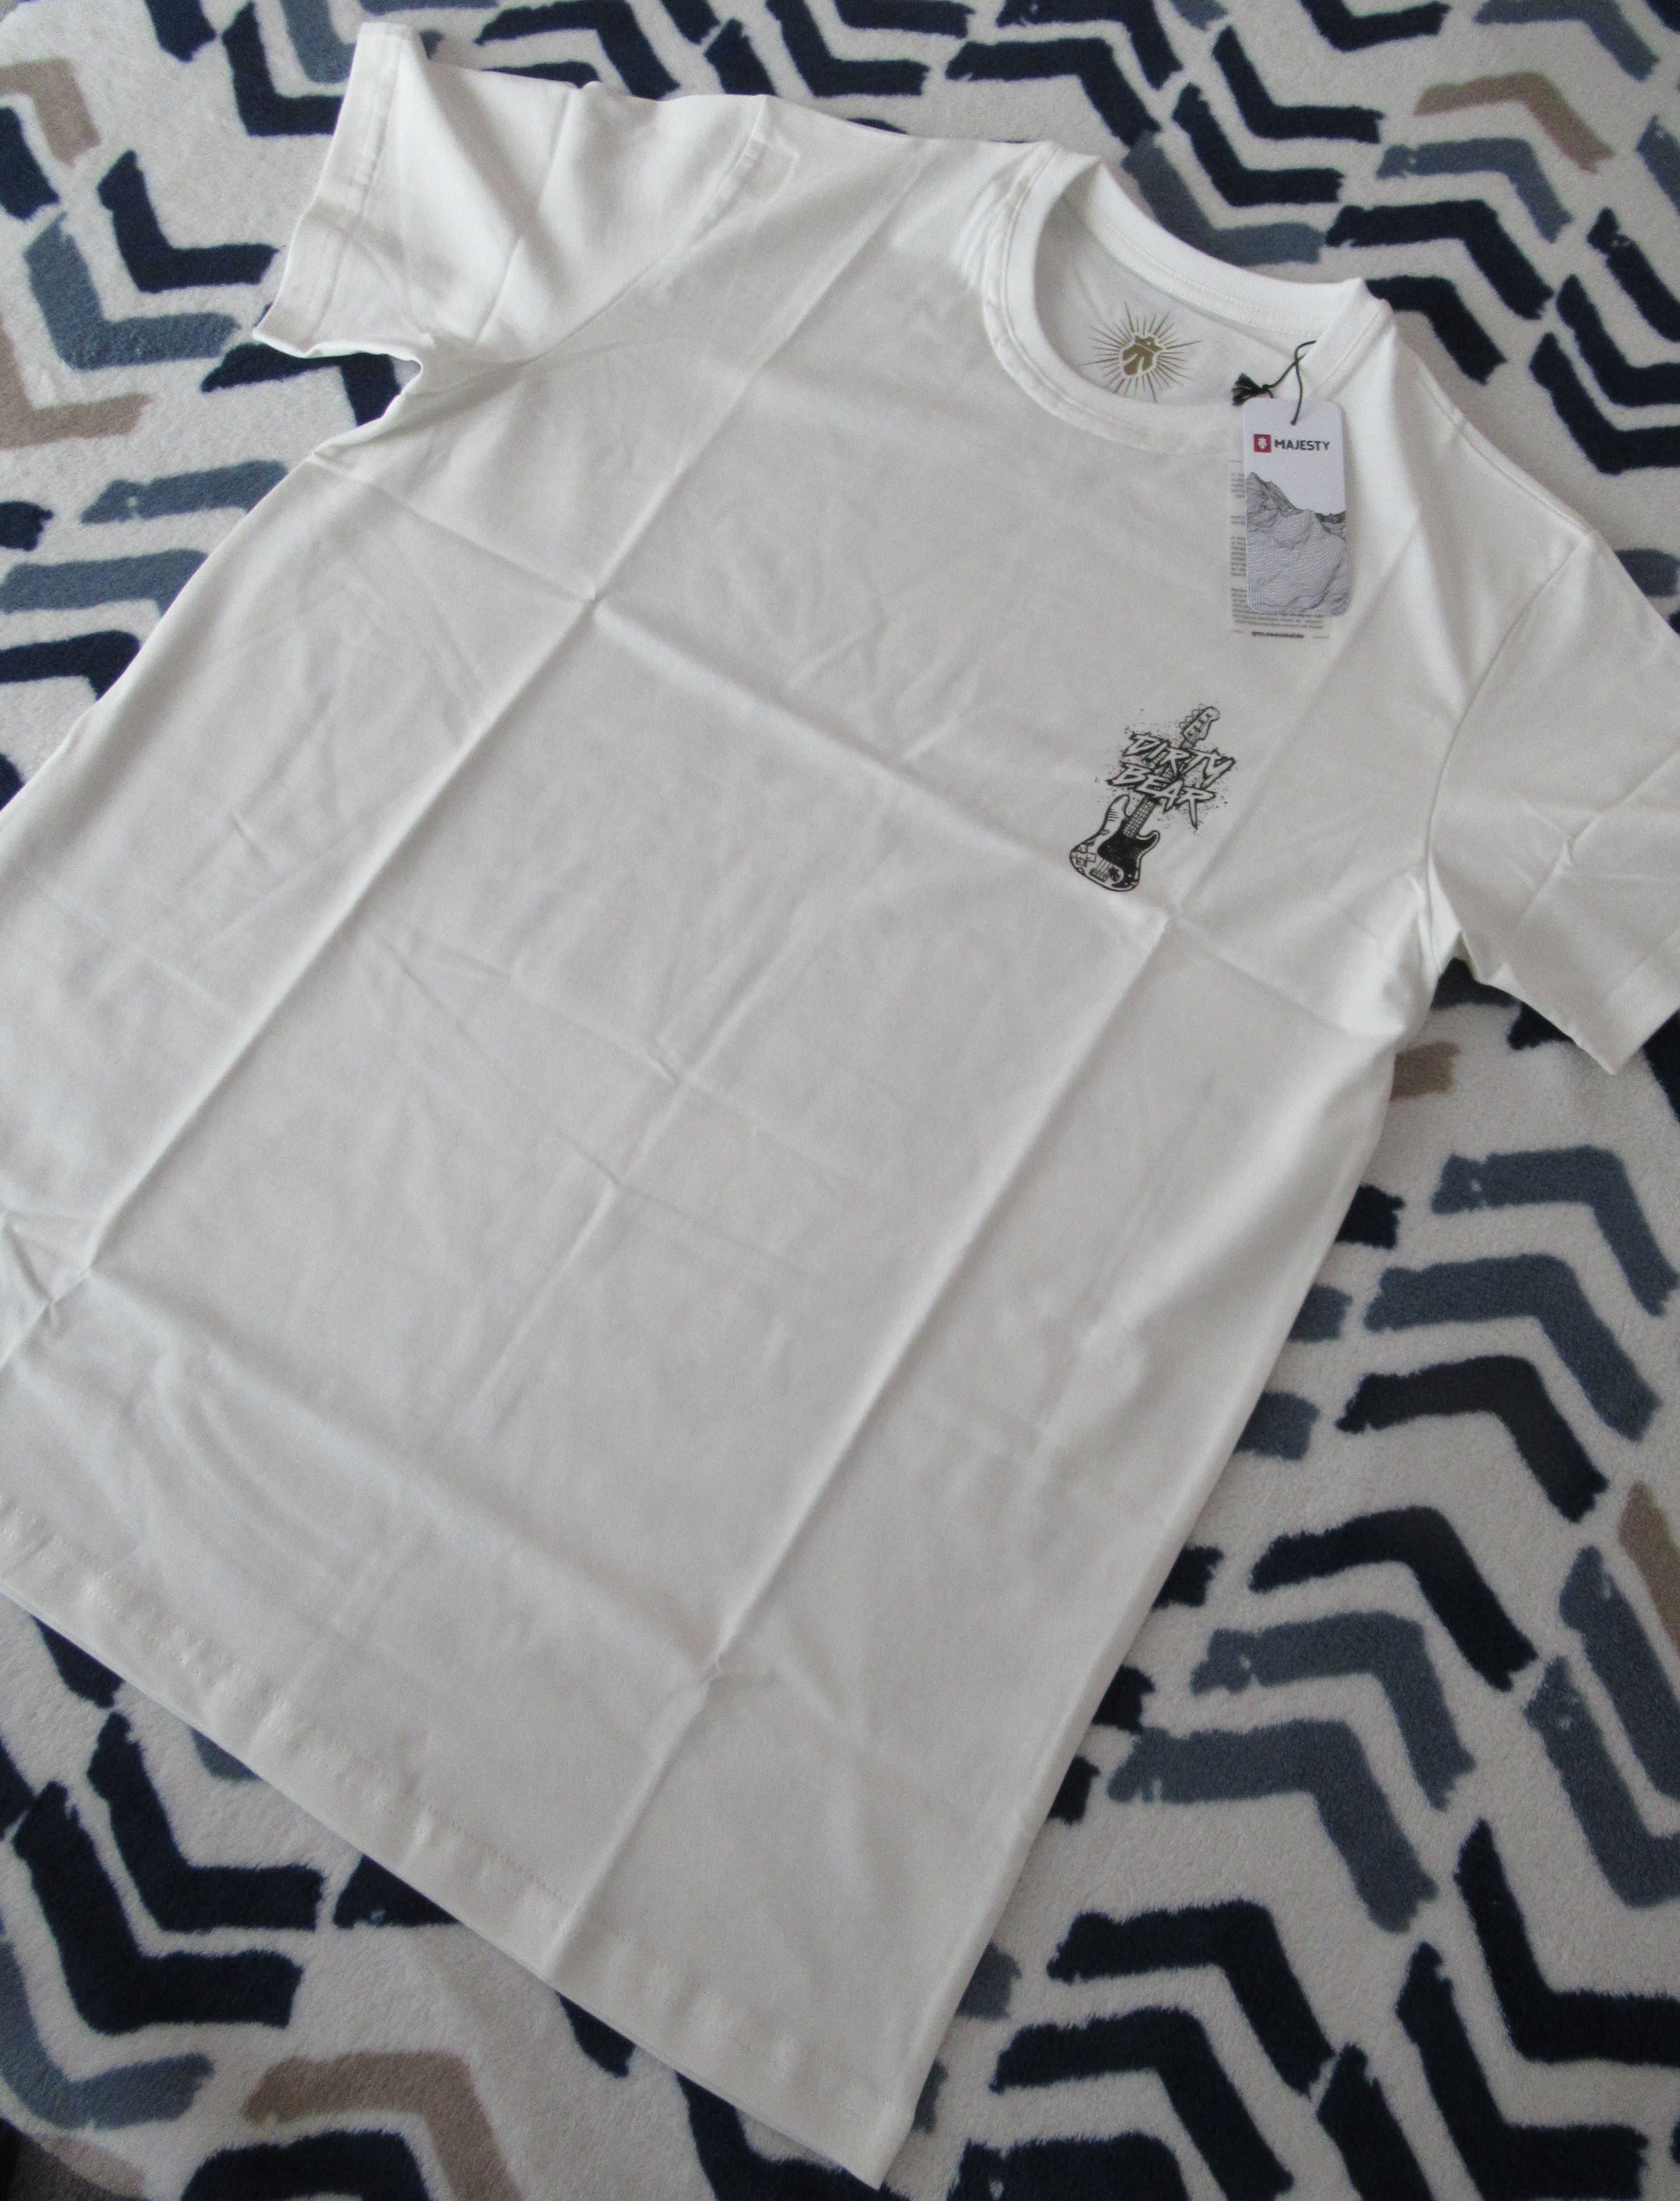 T-shirt Koszulka Majesty Bear męska - rozmiar M/L/XL